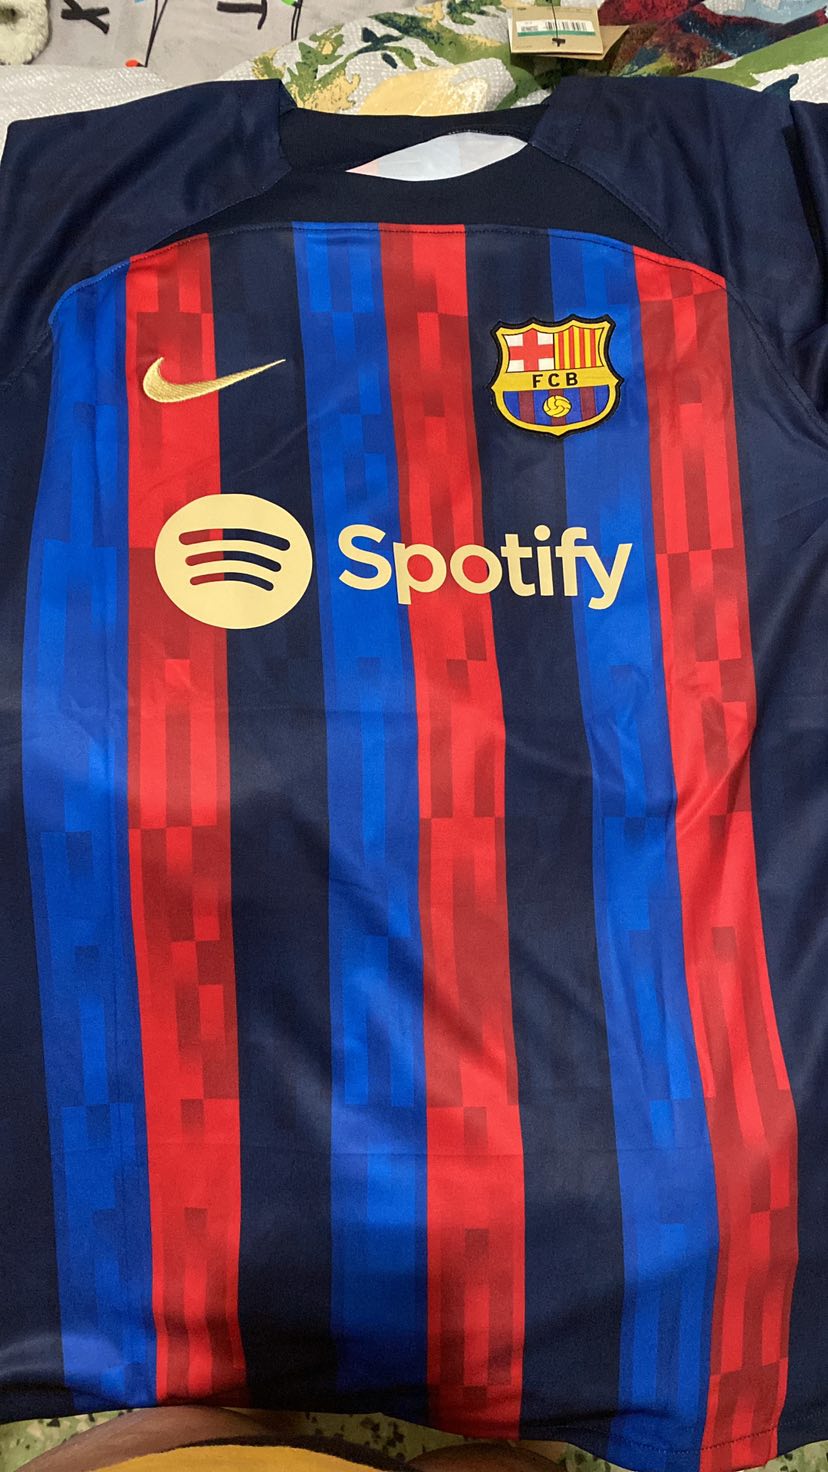 New 23/24 Barcelona Home Shirt, Barcelona Home Jerseys - Adonis Jersey